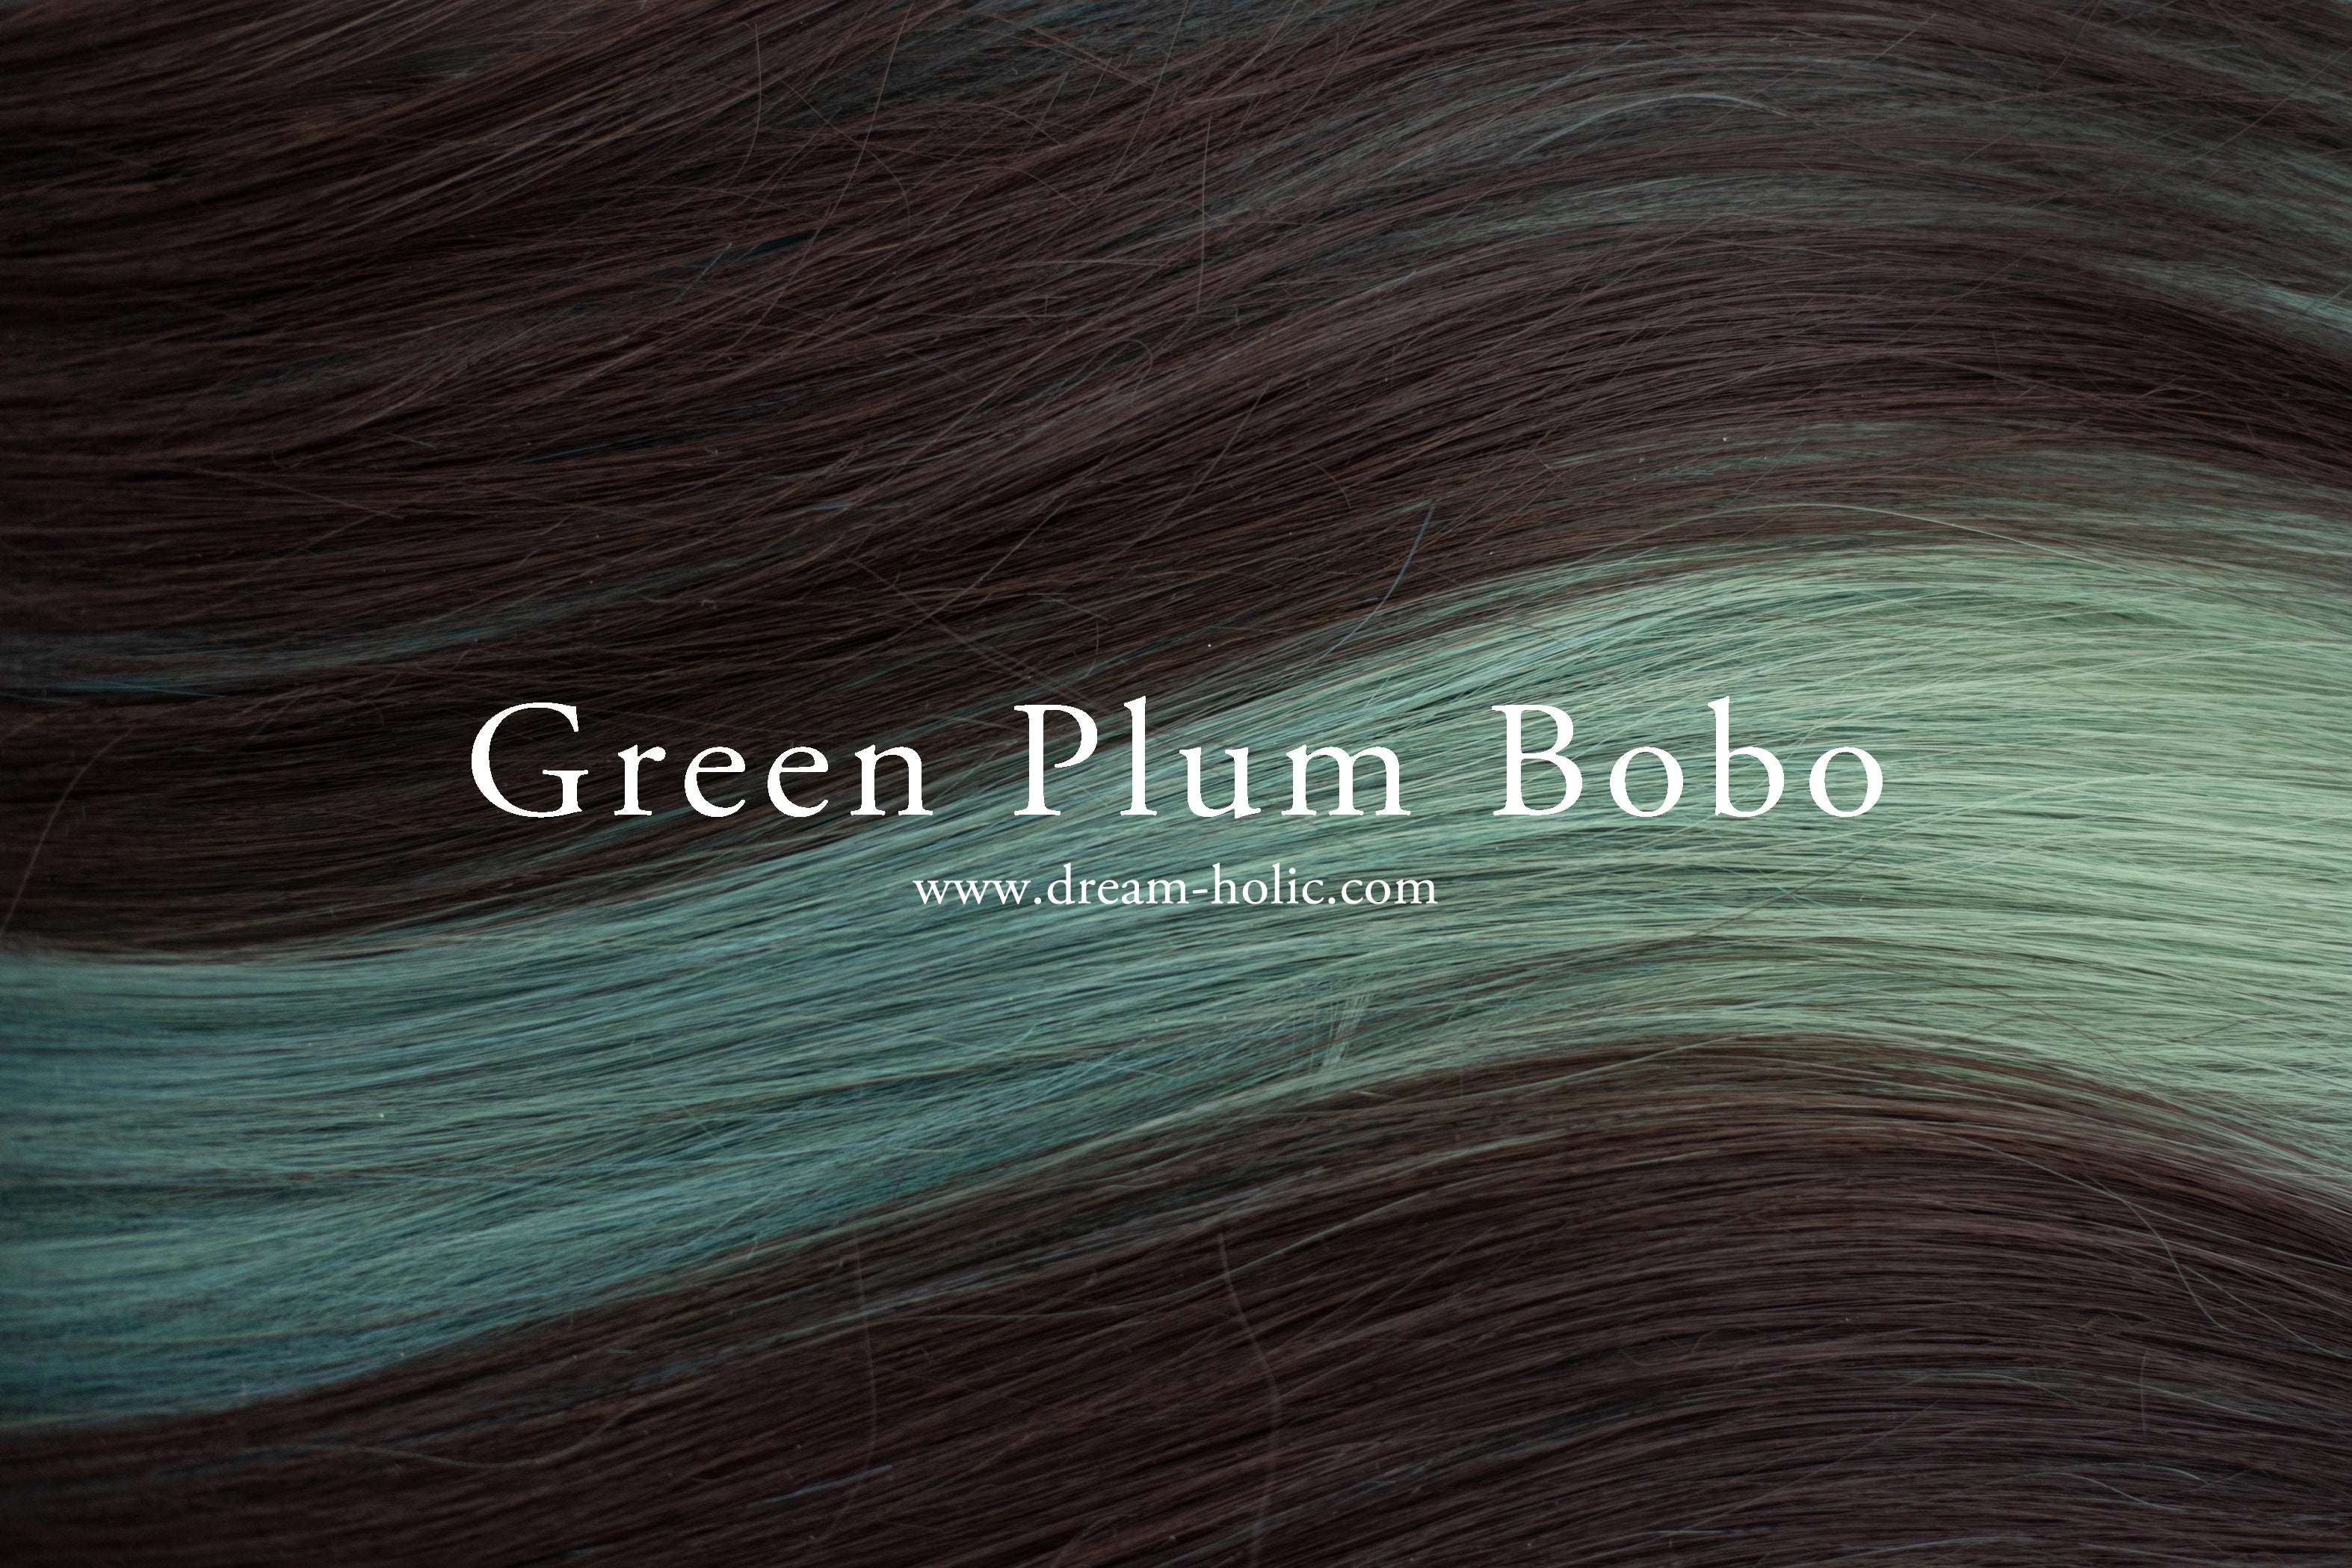 Green Plum Bobo